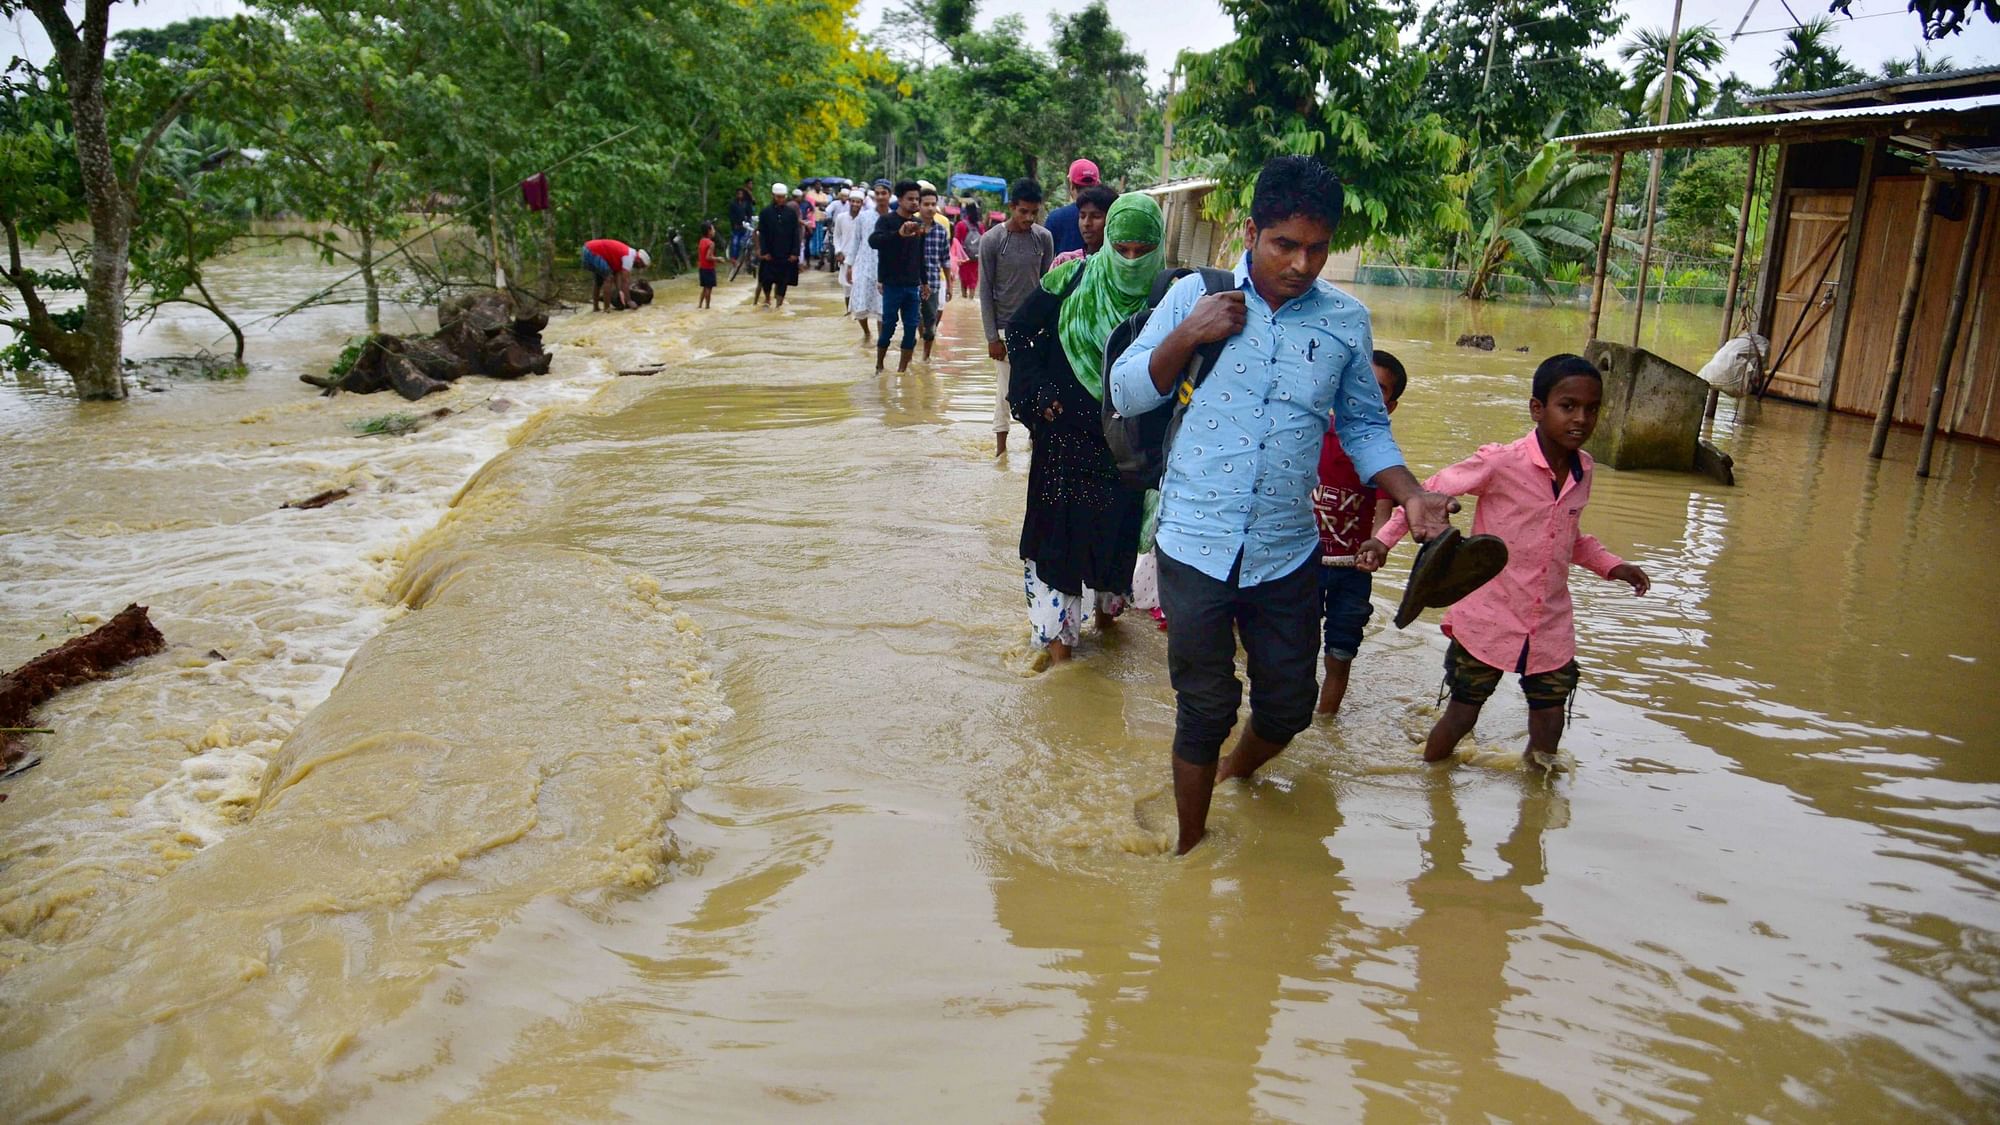 <div class="paragraphs"><p>Villagers wade through a flood affected area following heavy rains in Hojai district of Assam.&nbsp;</p></div>